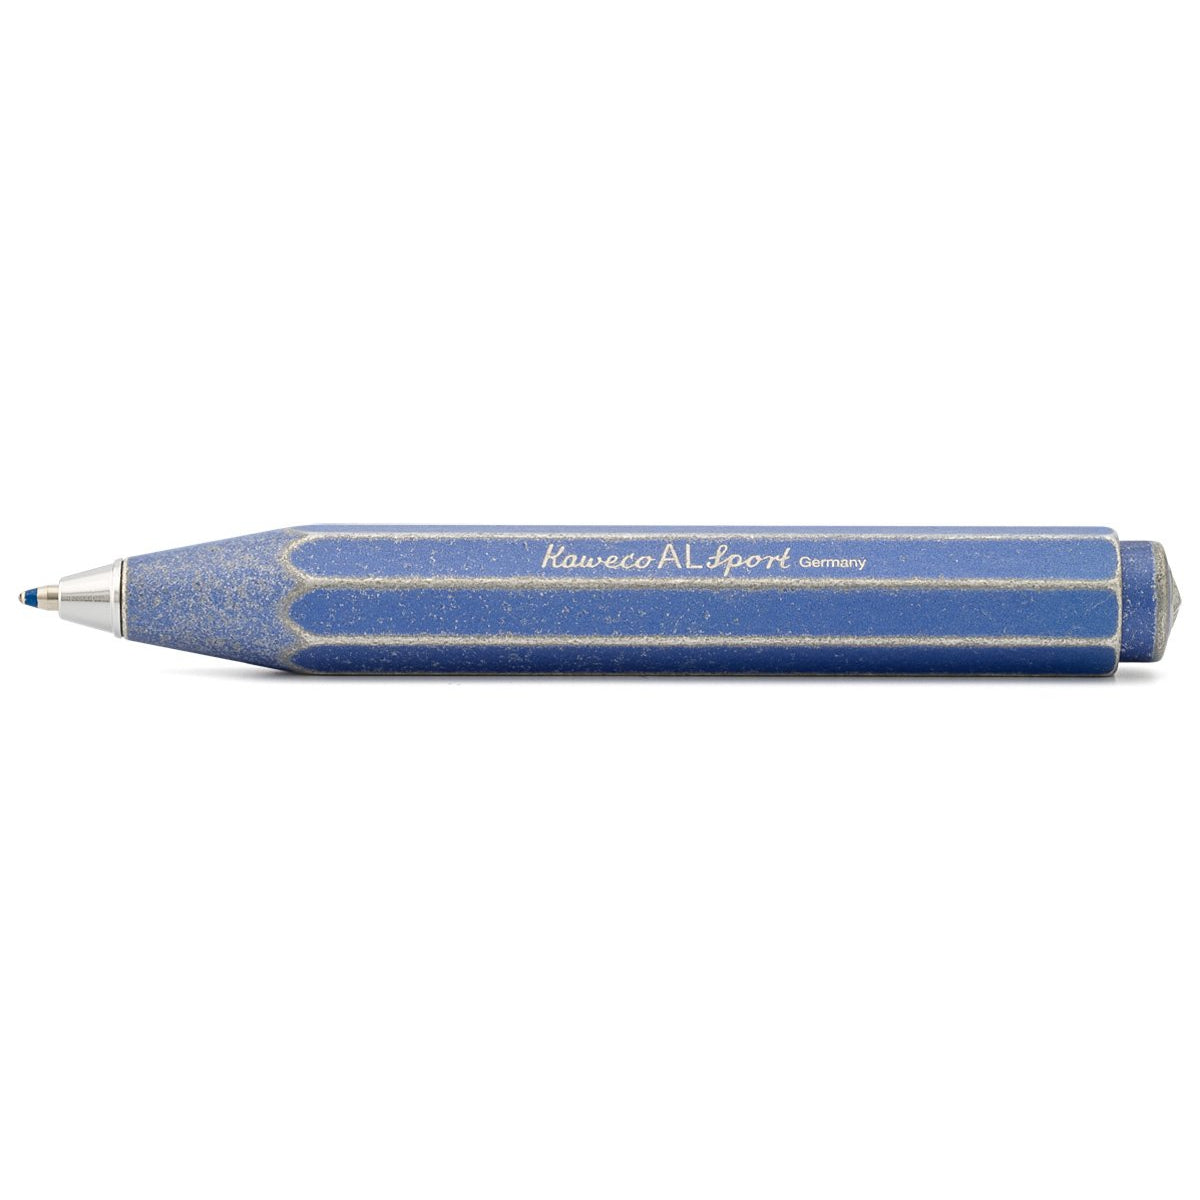 Kaweco AL Sport Stonewashed Blue Ballpoint Pen | 10000730 | Pen Place